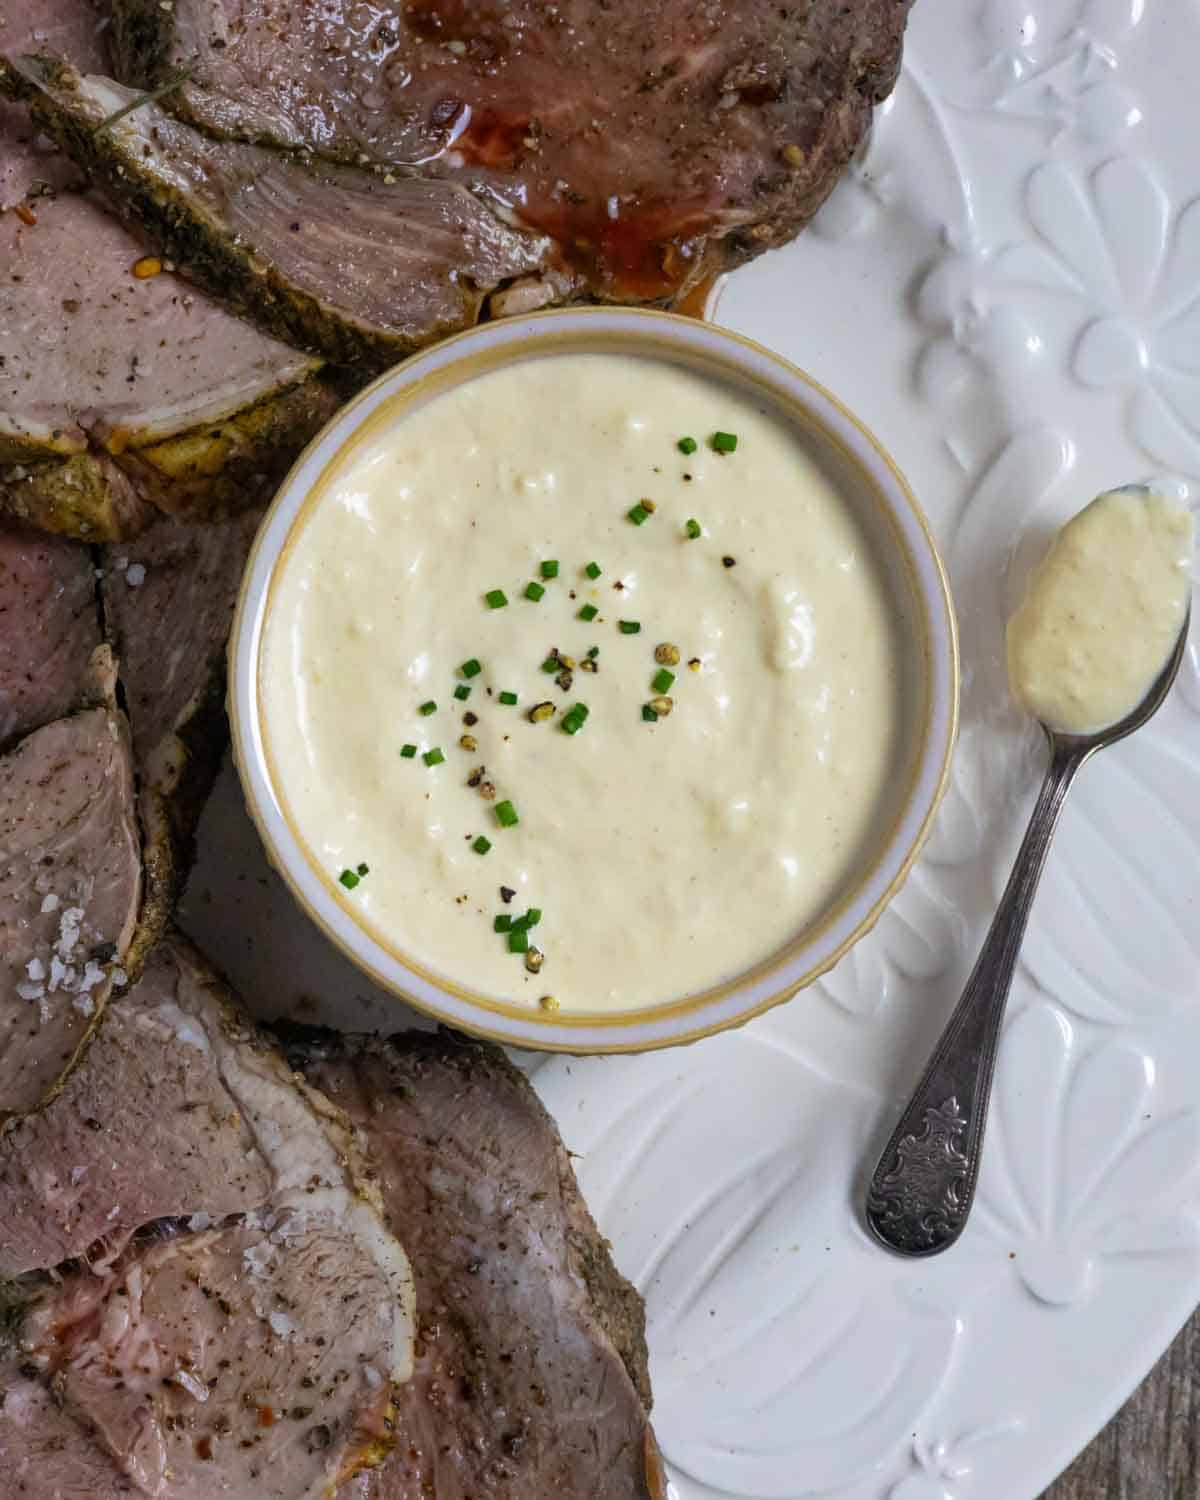 Ramekin of horseradish sauce on a white plate with slices of smoked lamb.